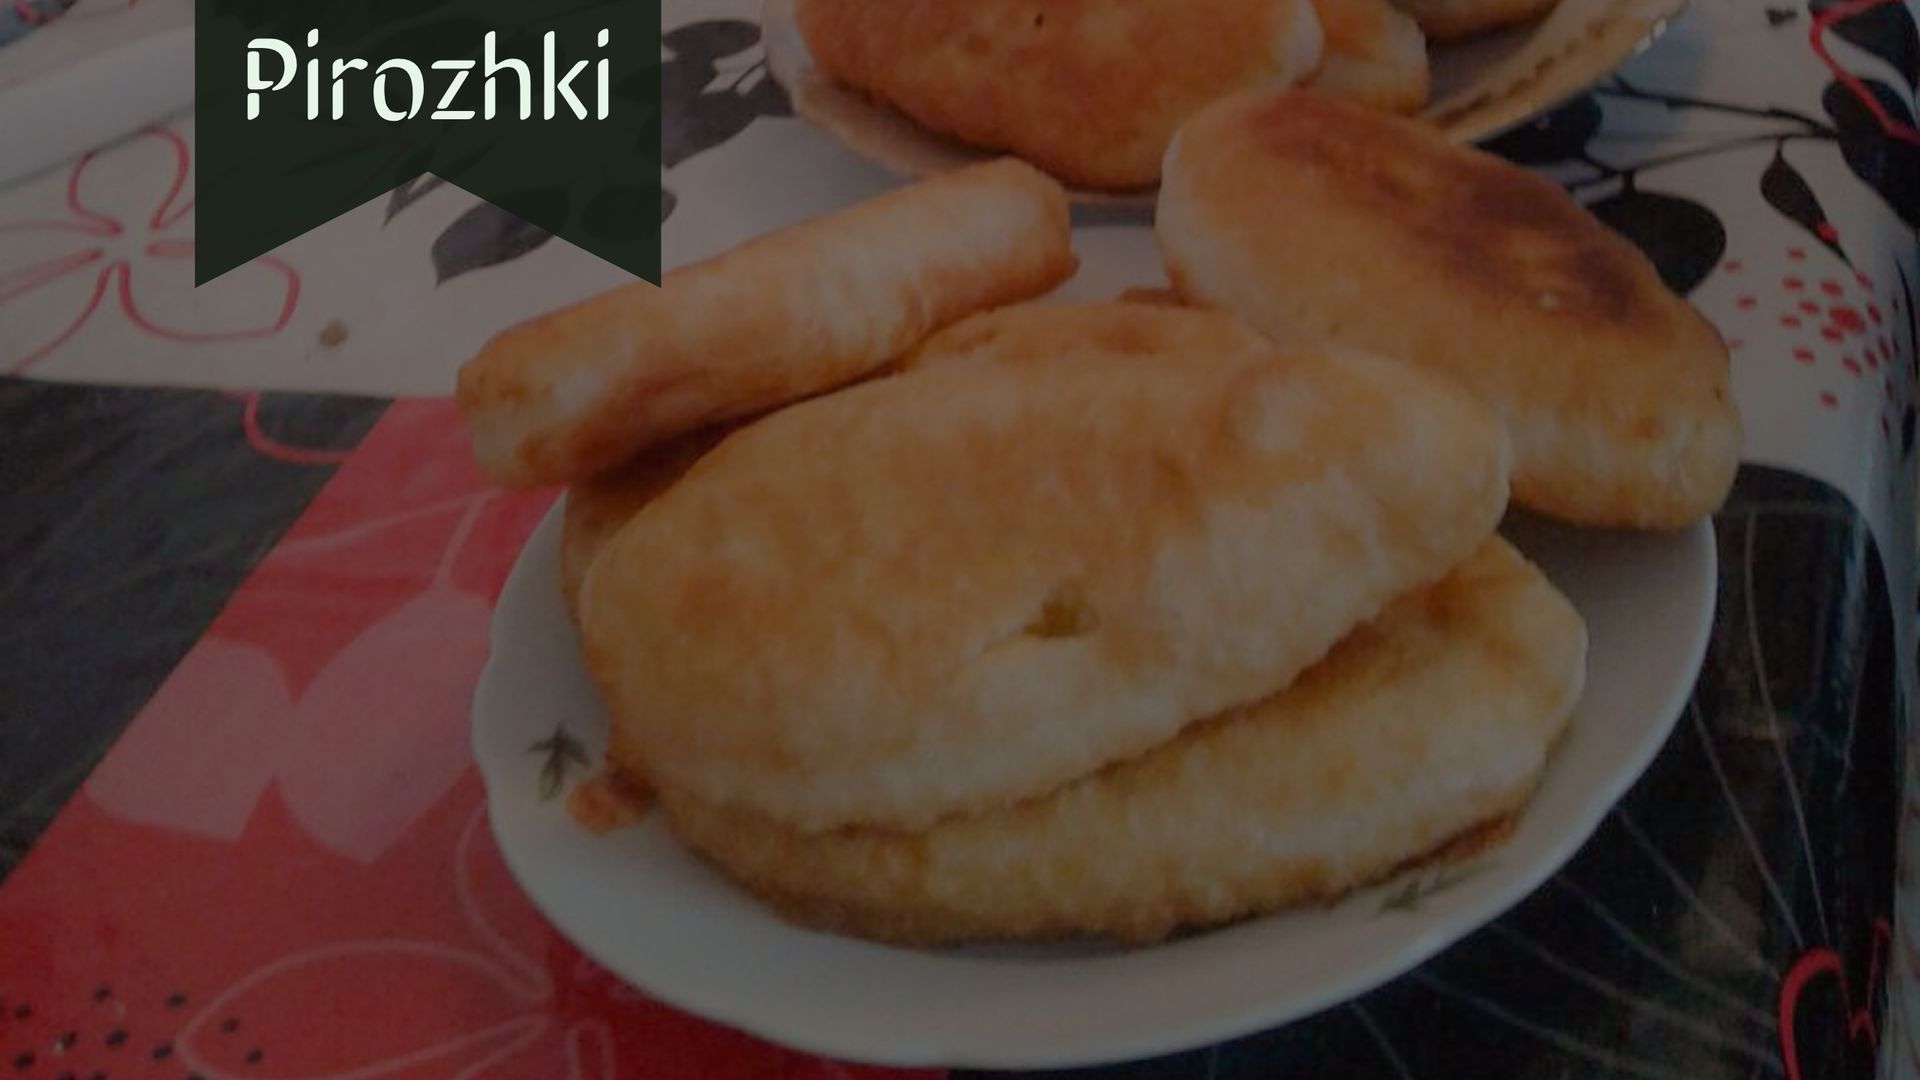 pirojki or pirozhki baked and fried apetizers